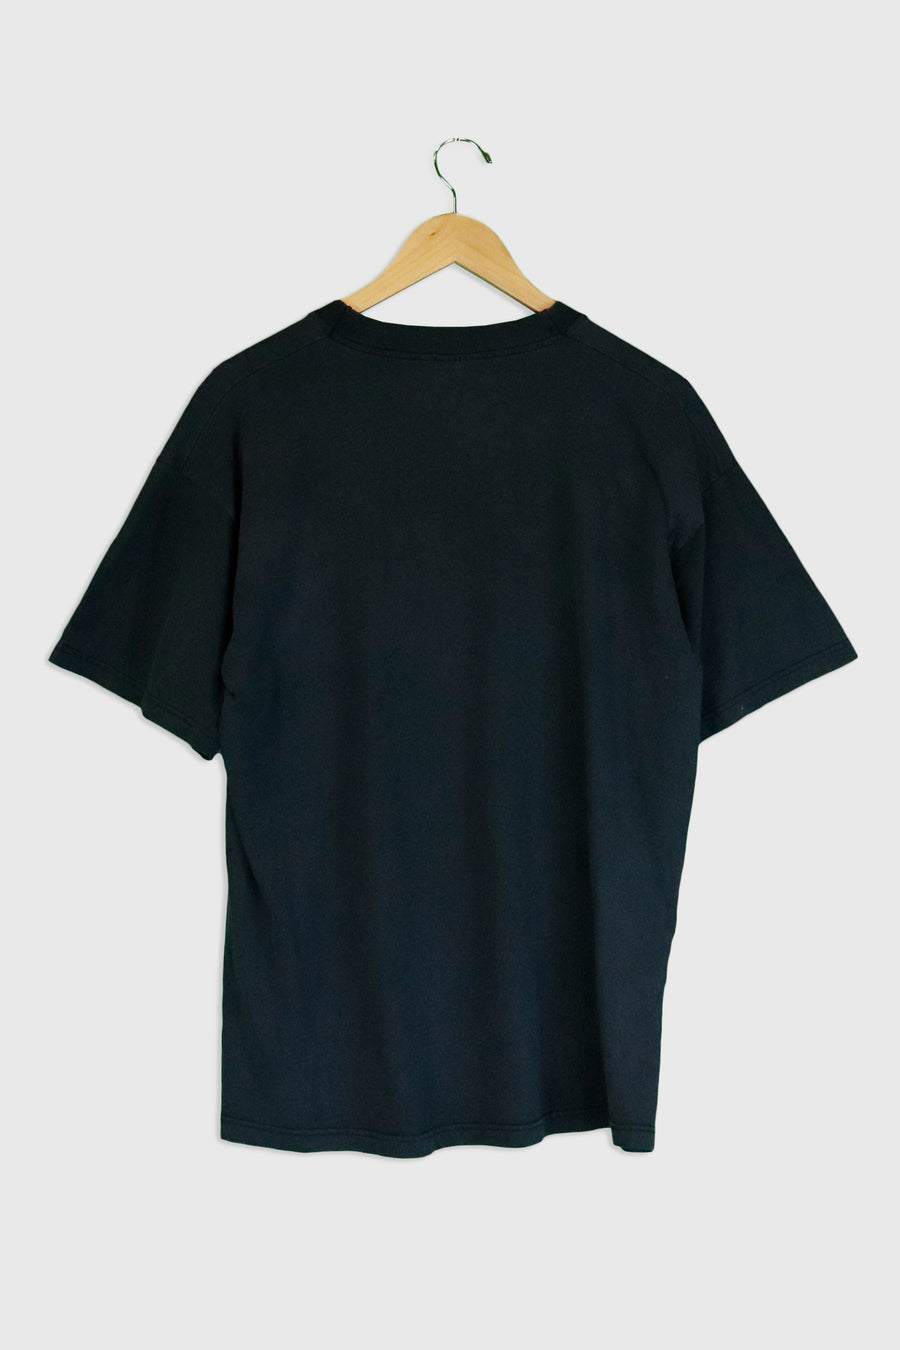 Vintage 1999 Big West Macross T Shirt Sz L